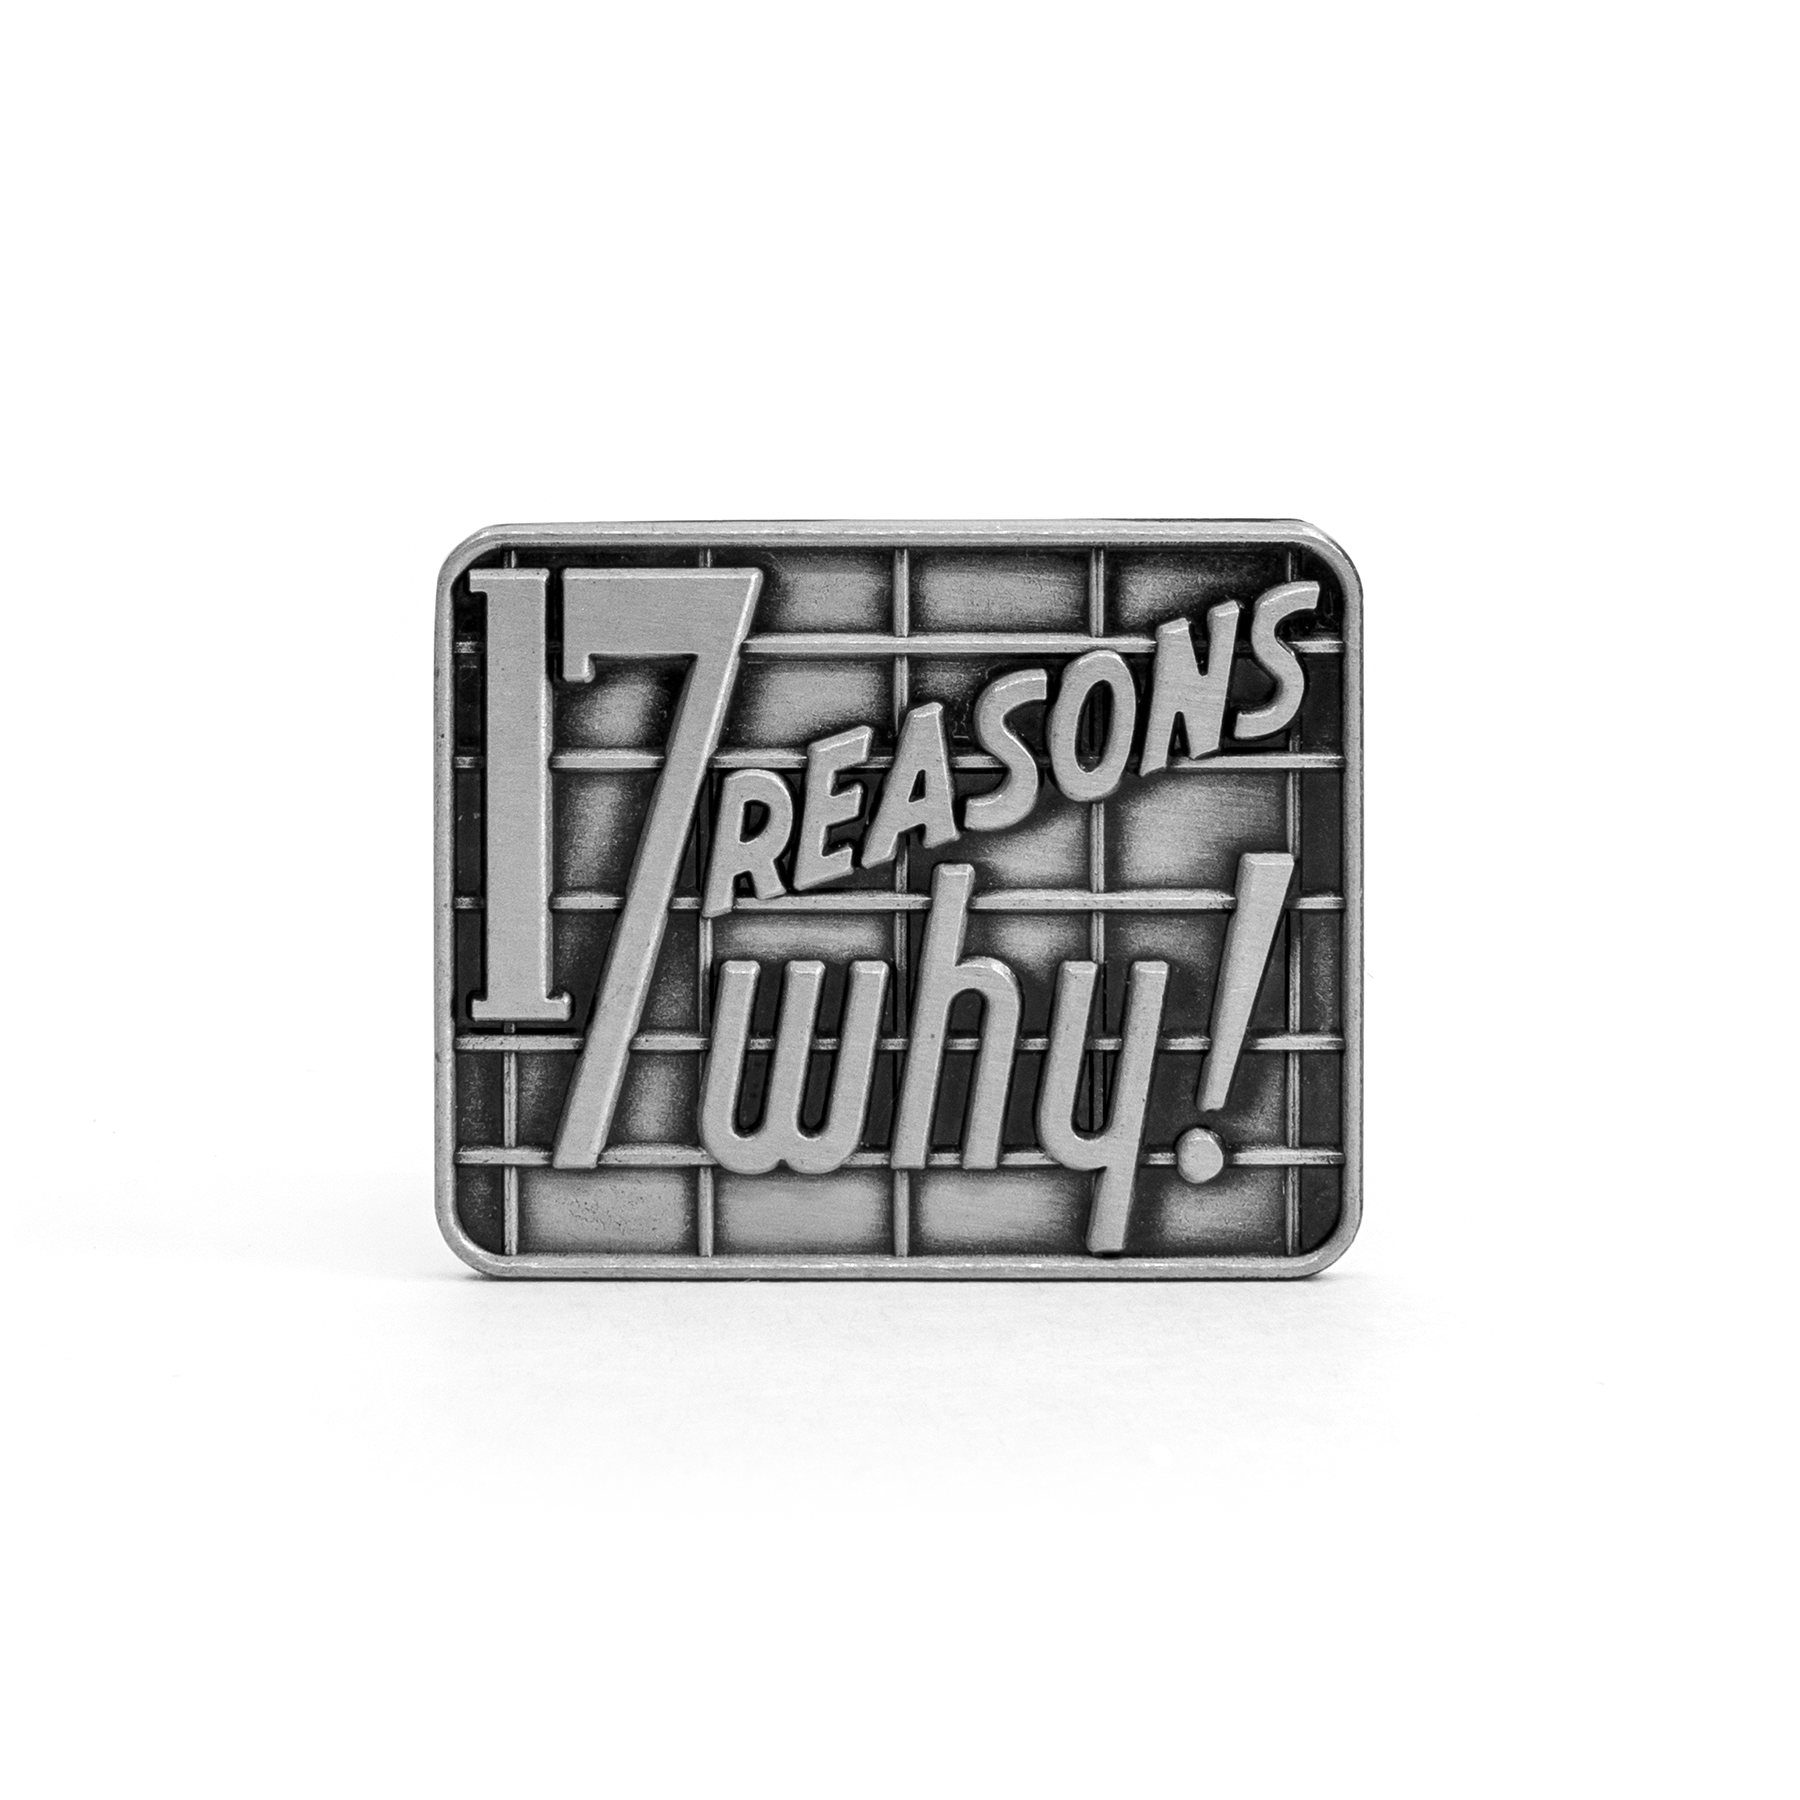 17 Reasons Why! molded pin